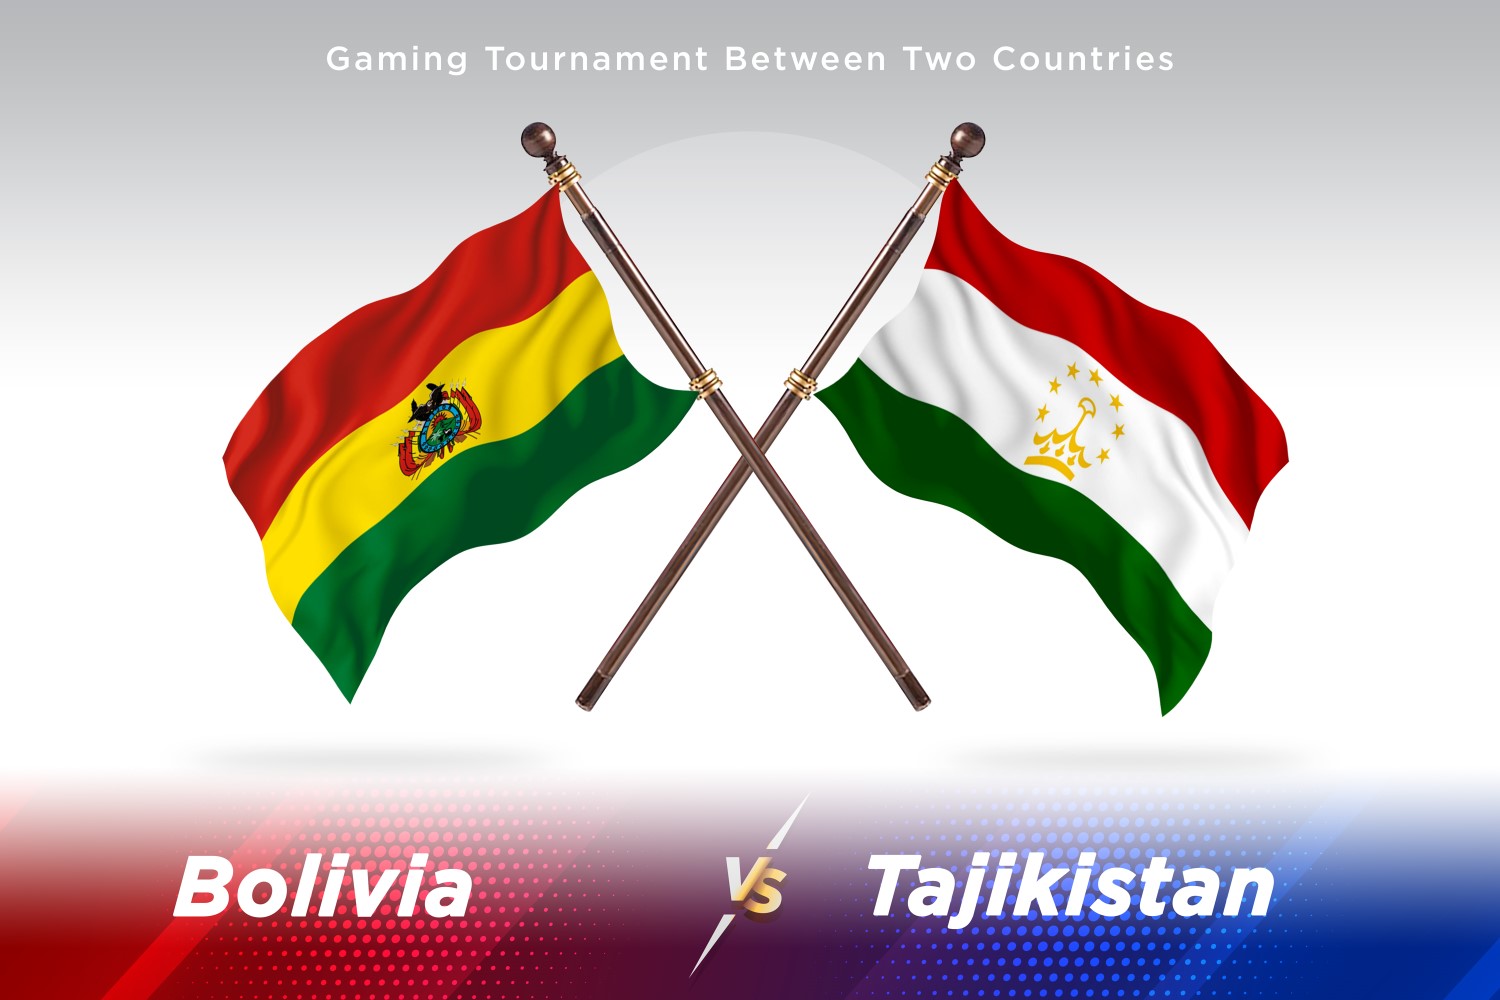 Bolivia versus Tajikistan Two Flags